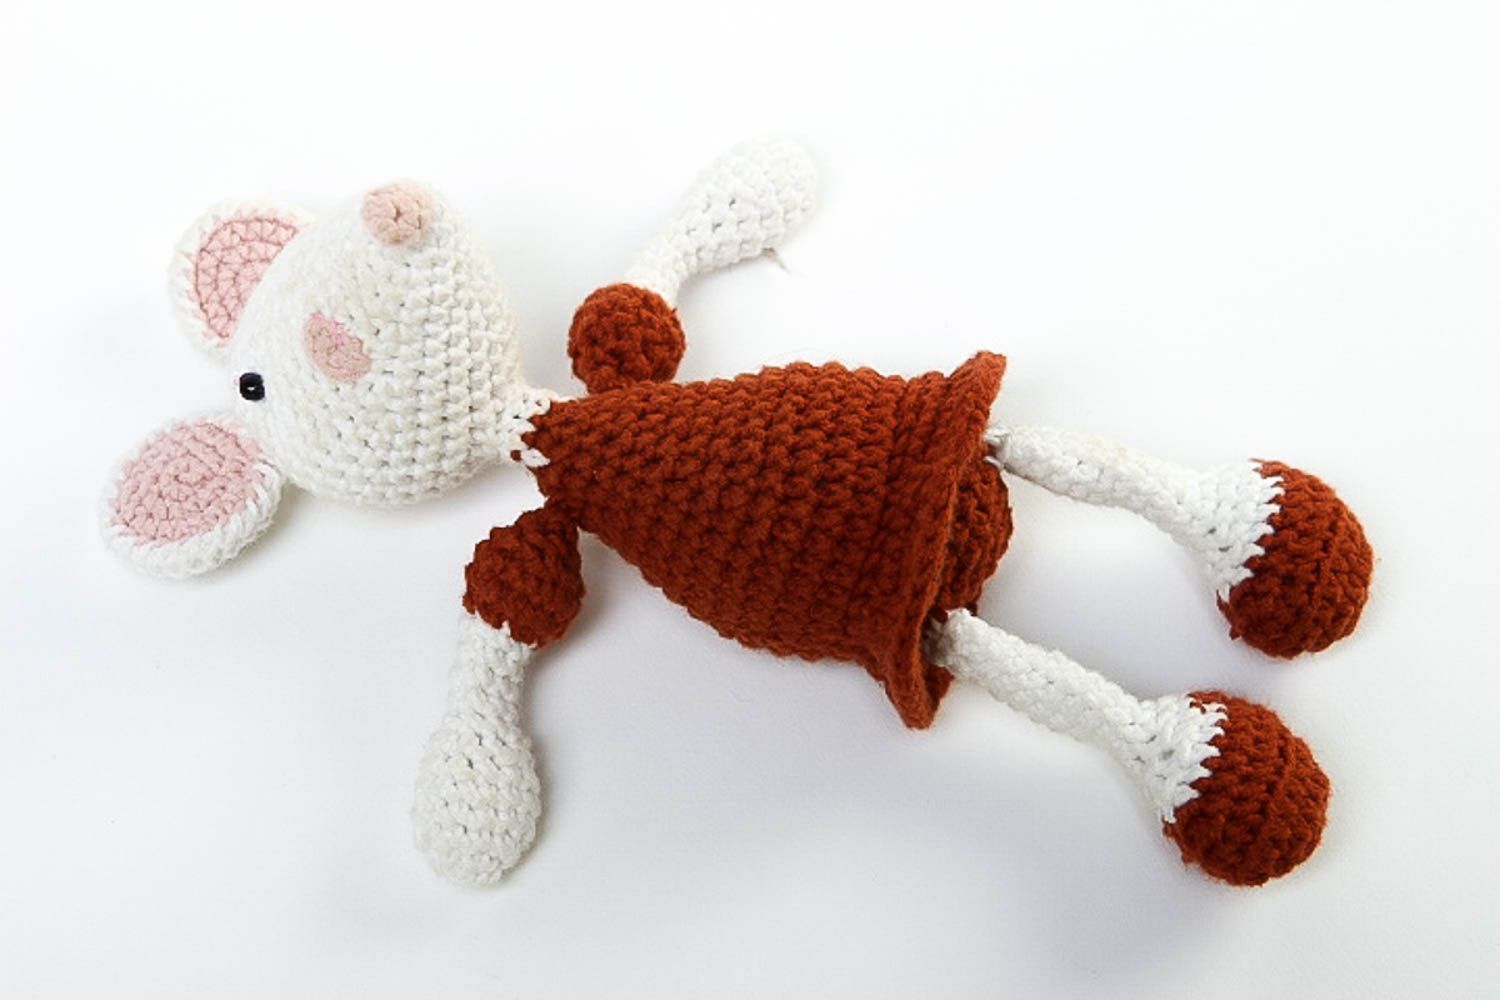 Handmade crocheted doll for children crocheted mouse toy nursery decor ideas photo 2